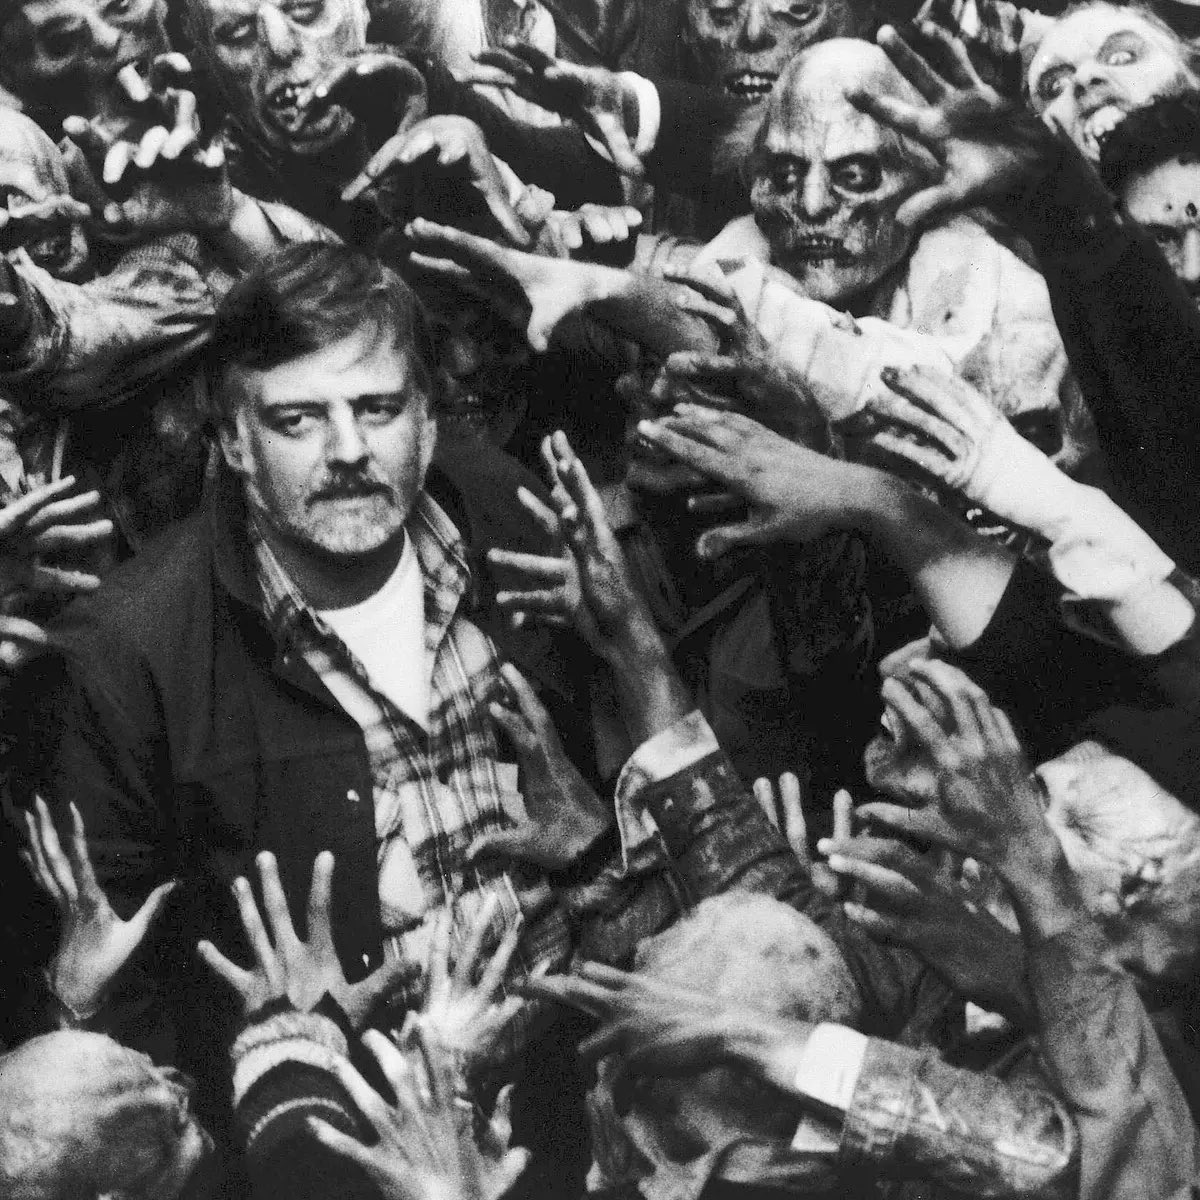 Aquarius season | George A. Romero x Dawn of the Dead 1978 #horrorhifi #georgearomero